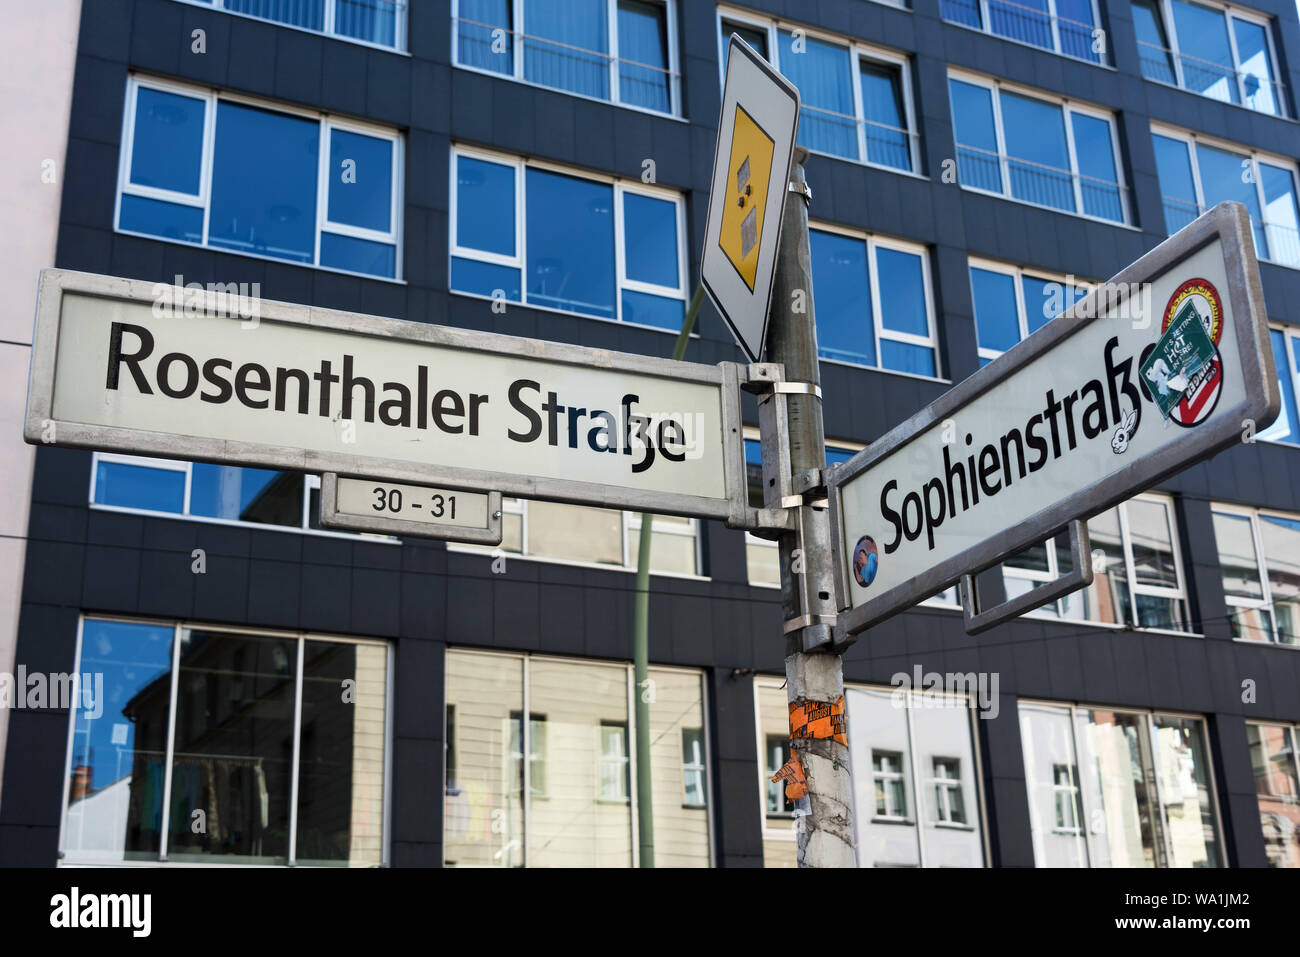 Street signs, Berlin, Germany: Rosenthaler Strasse and Sophienstrasse Stock Photo